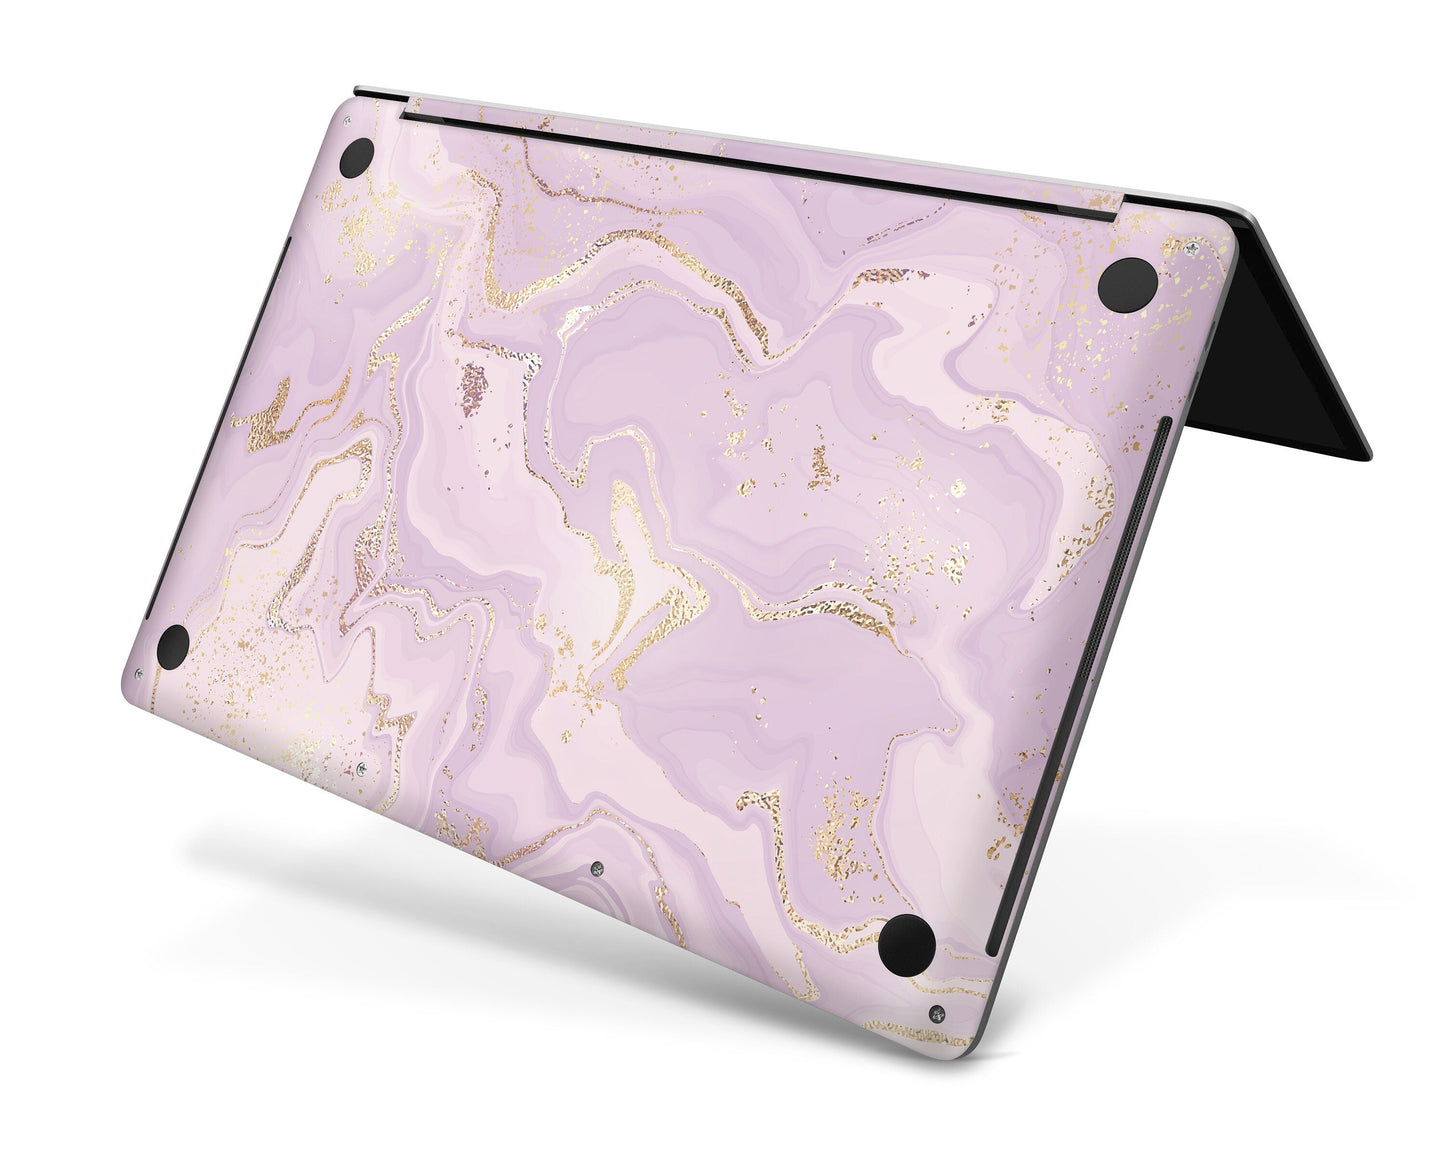 Lux Skins MacBook Ethereal Lavender Marble Pro 16" (A2141) Skins - Pattern Marble Skin